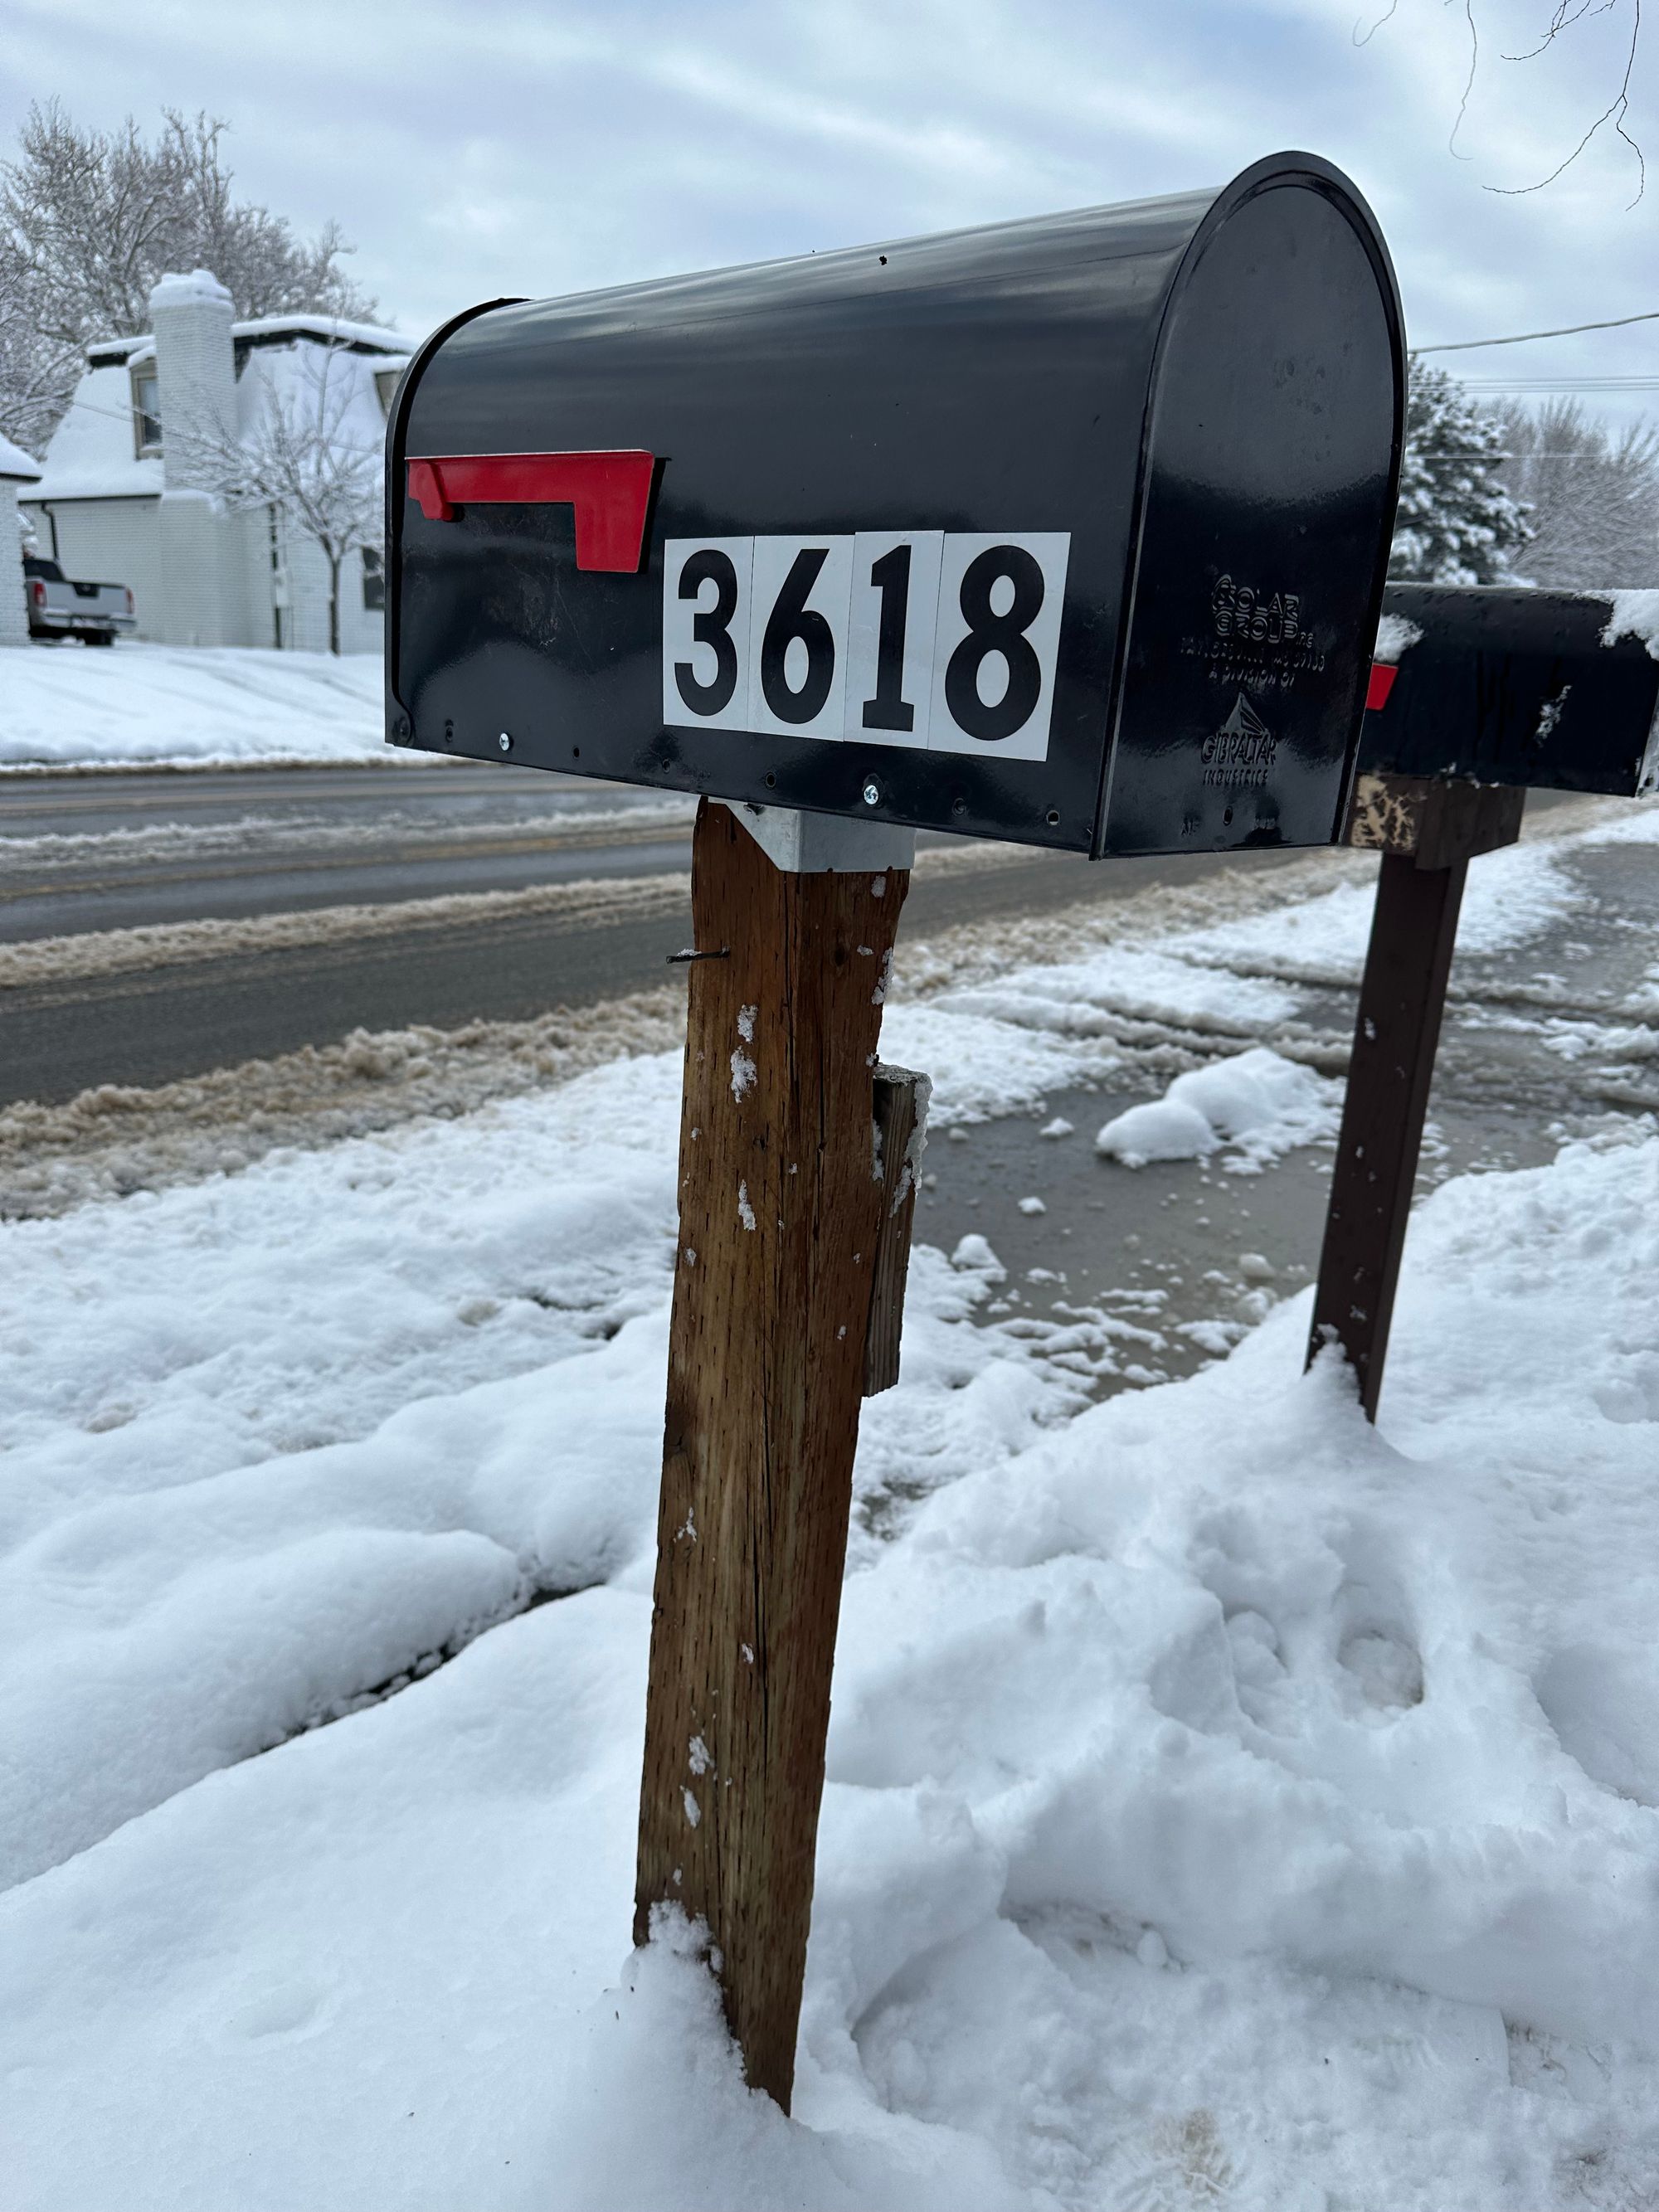 Some mailbox mounting repairs